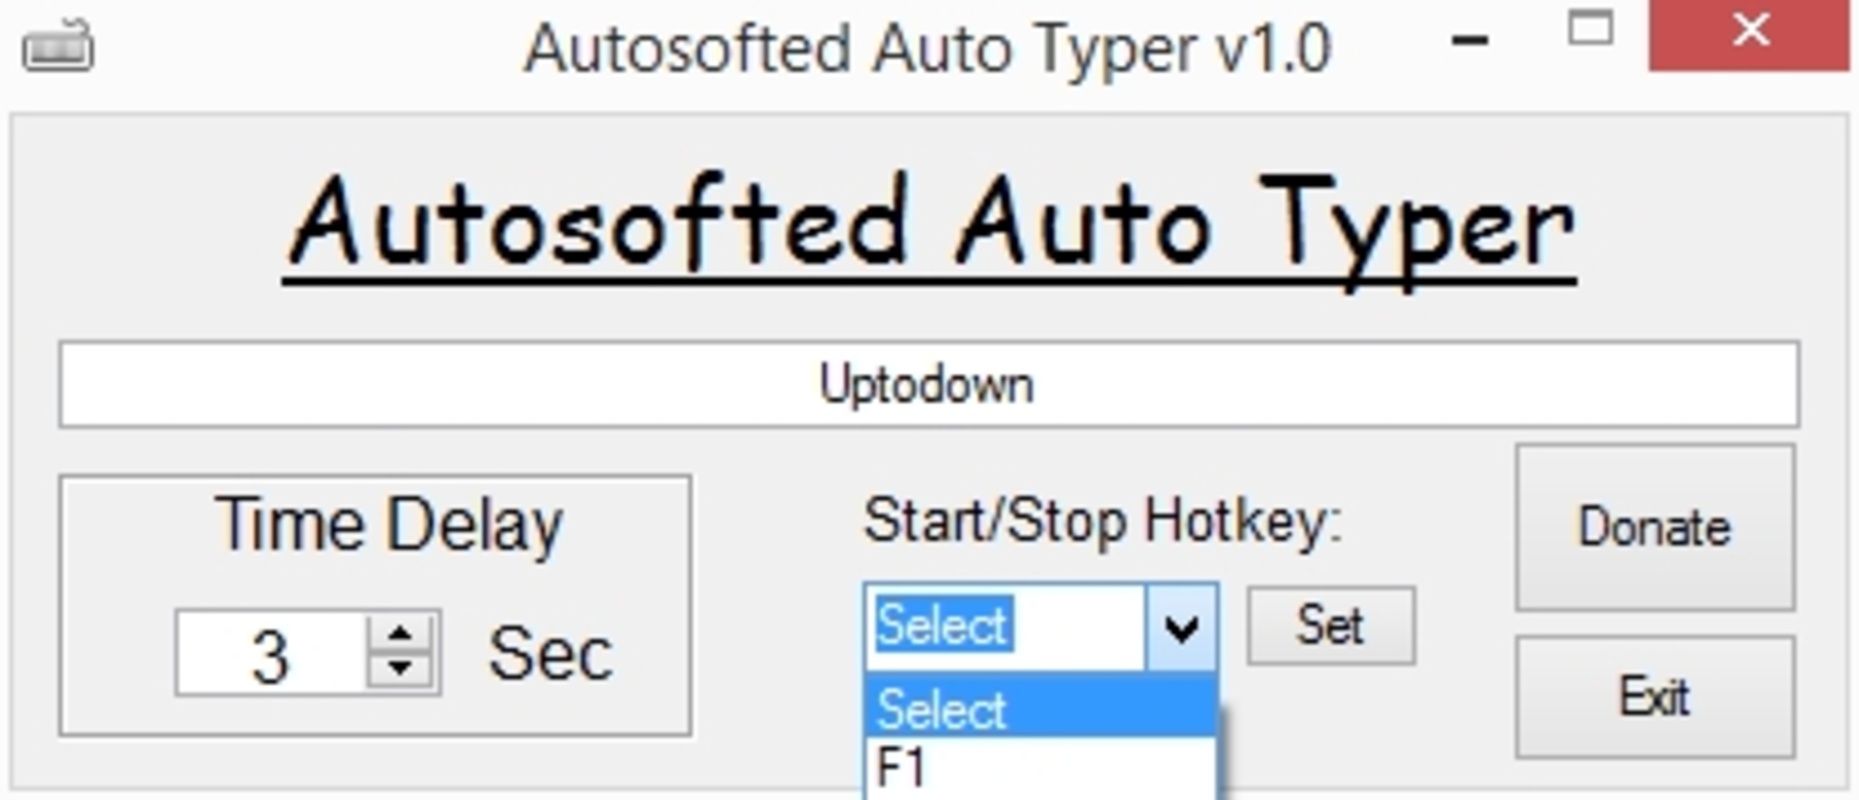 Auto Typer 34.1.1 feature